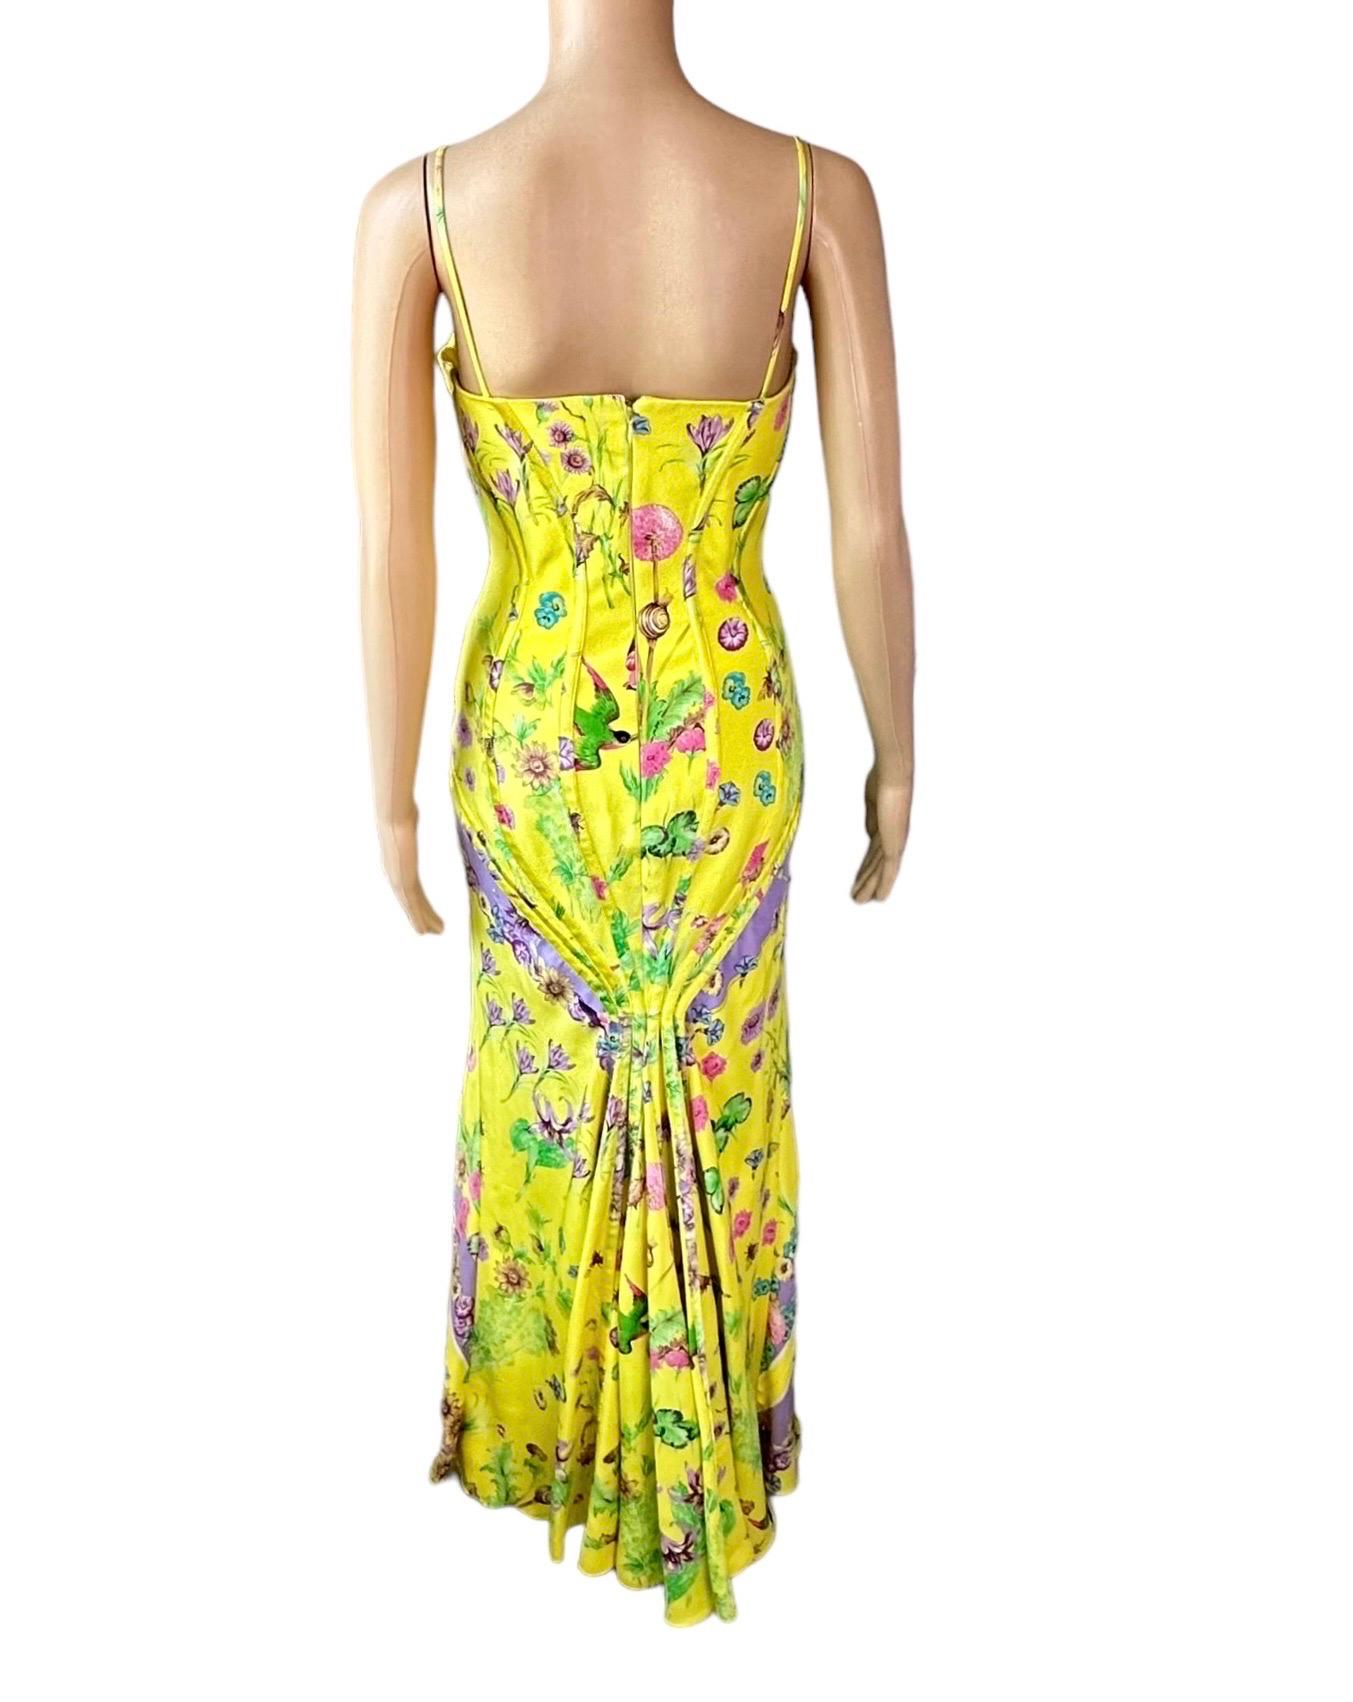 Versace S/S 2006 Bustier Corset Floral Print Evening Dress Gown For Sale 3